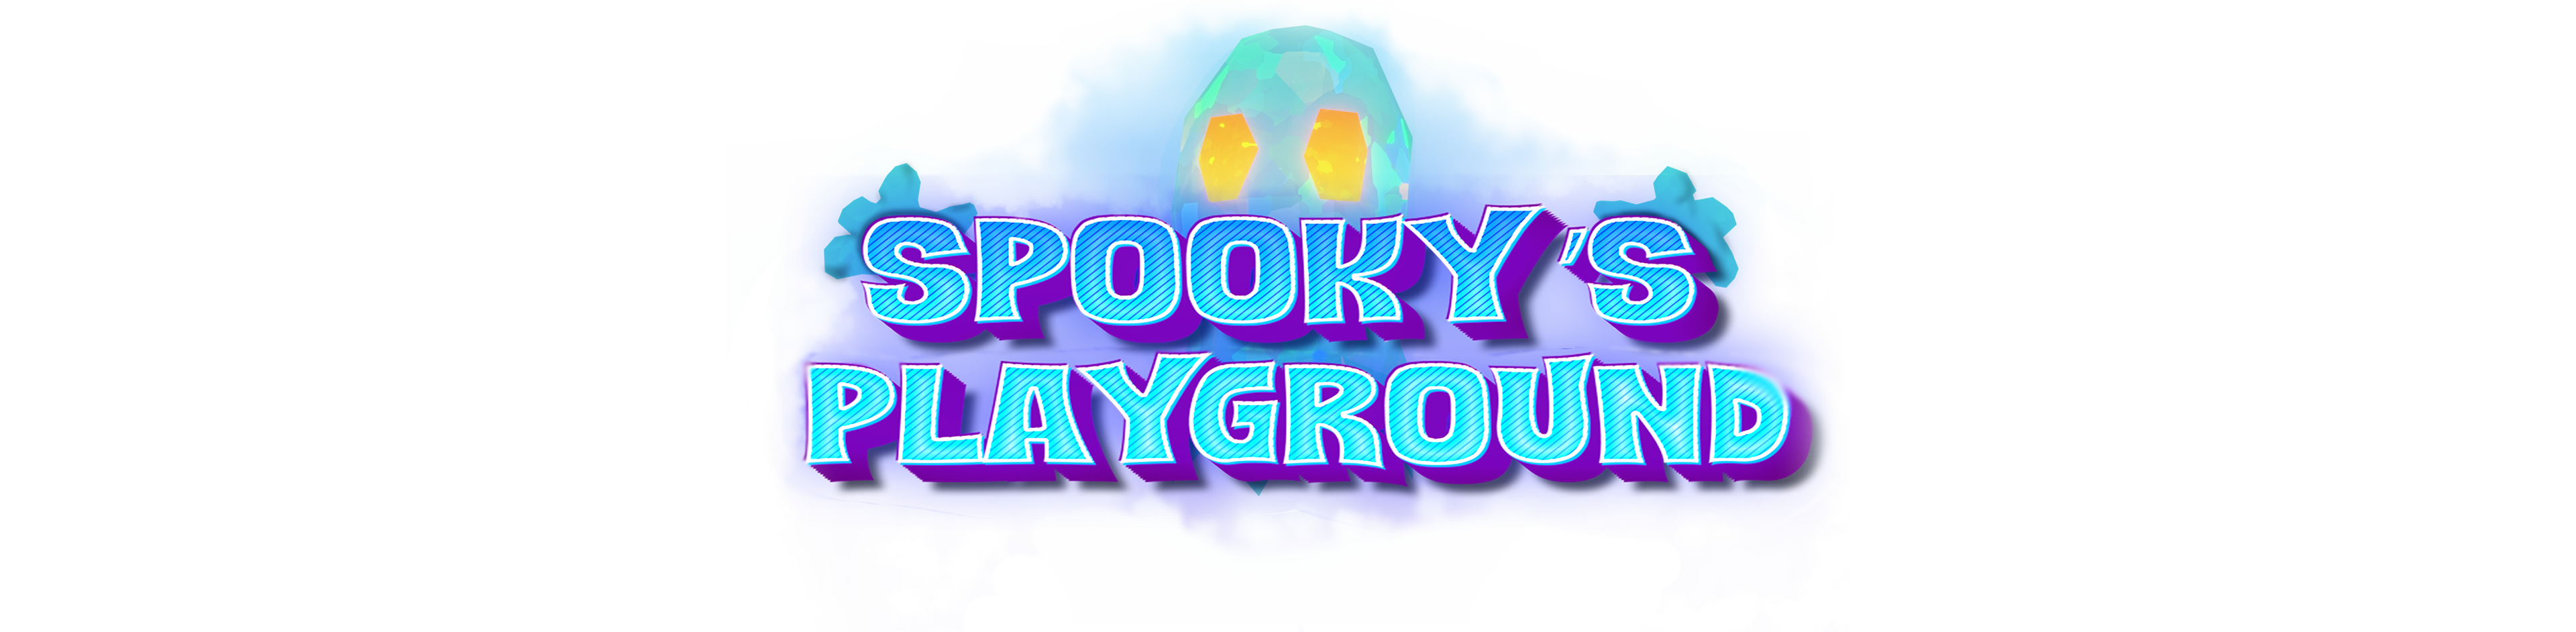 Spooky's Playground